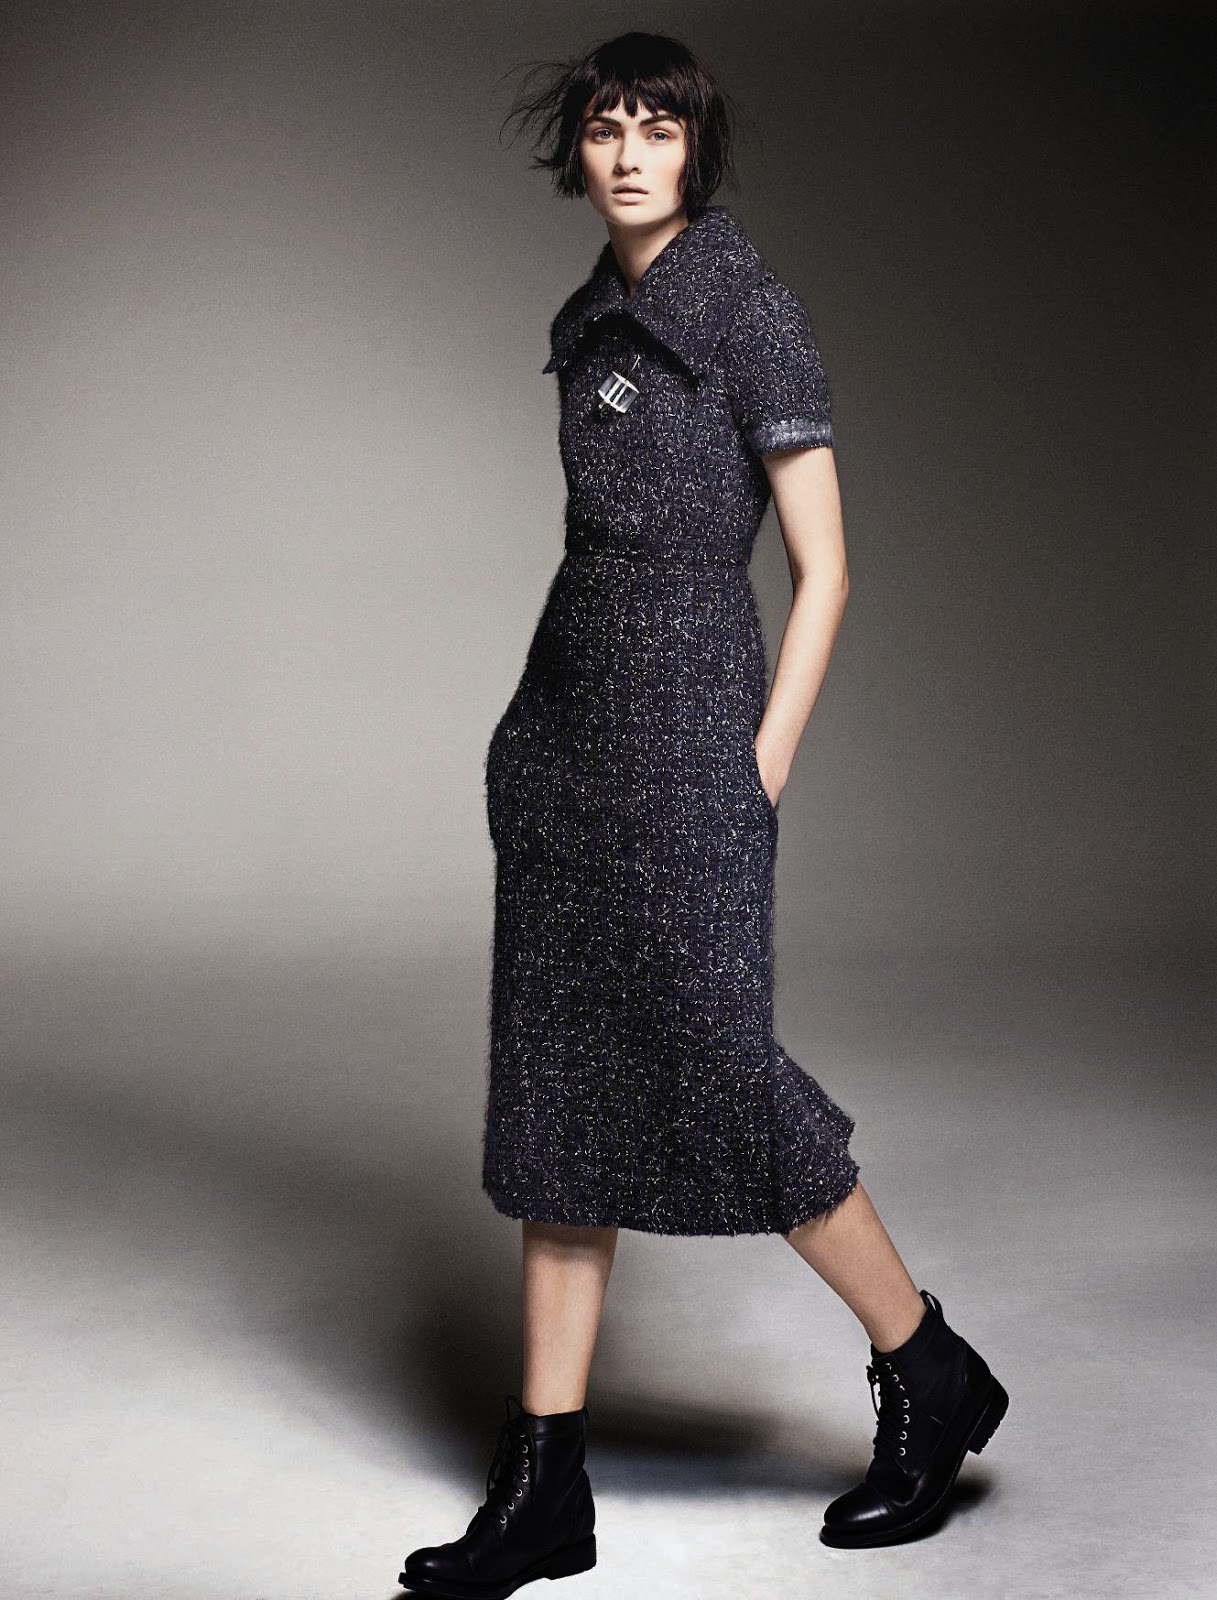 Duchess Dior: Laura Mullen by Takay for ELLE France November 2014